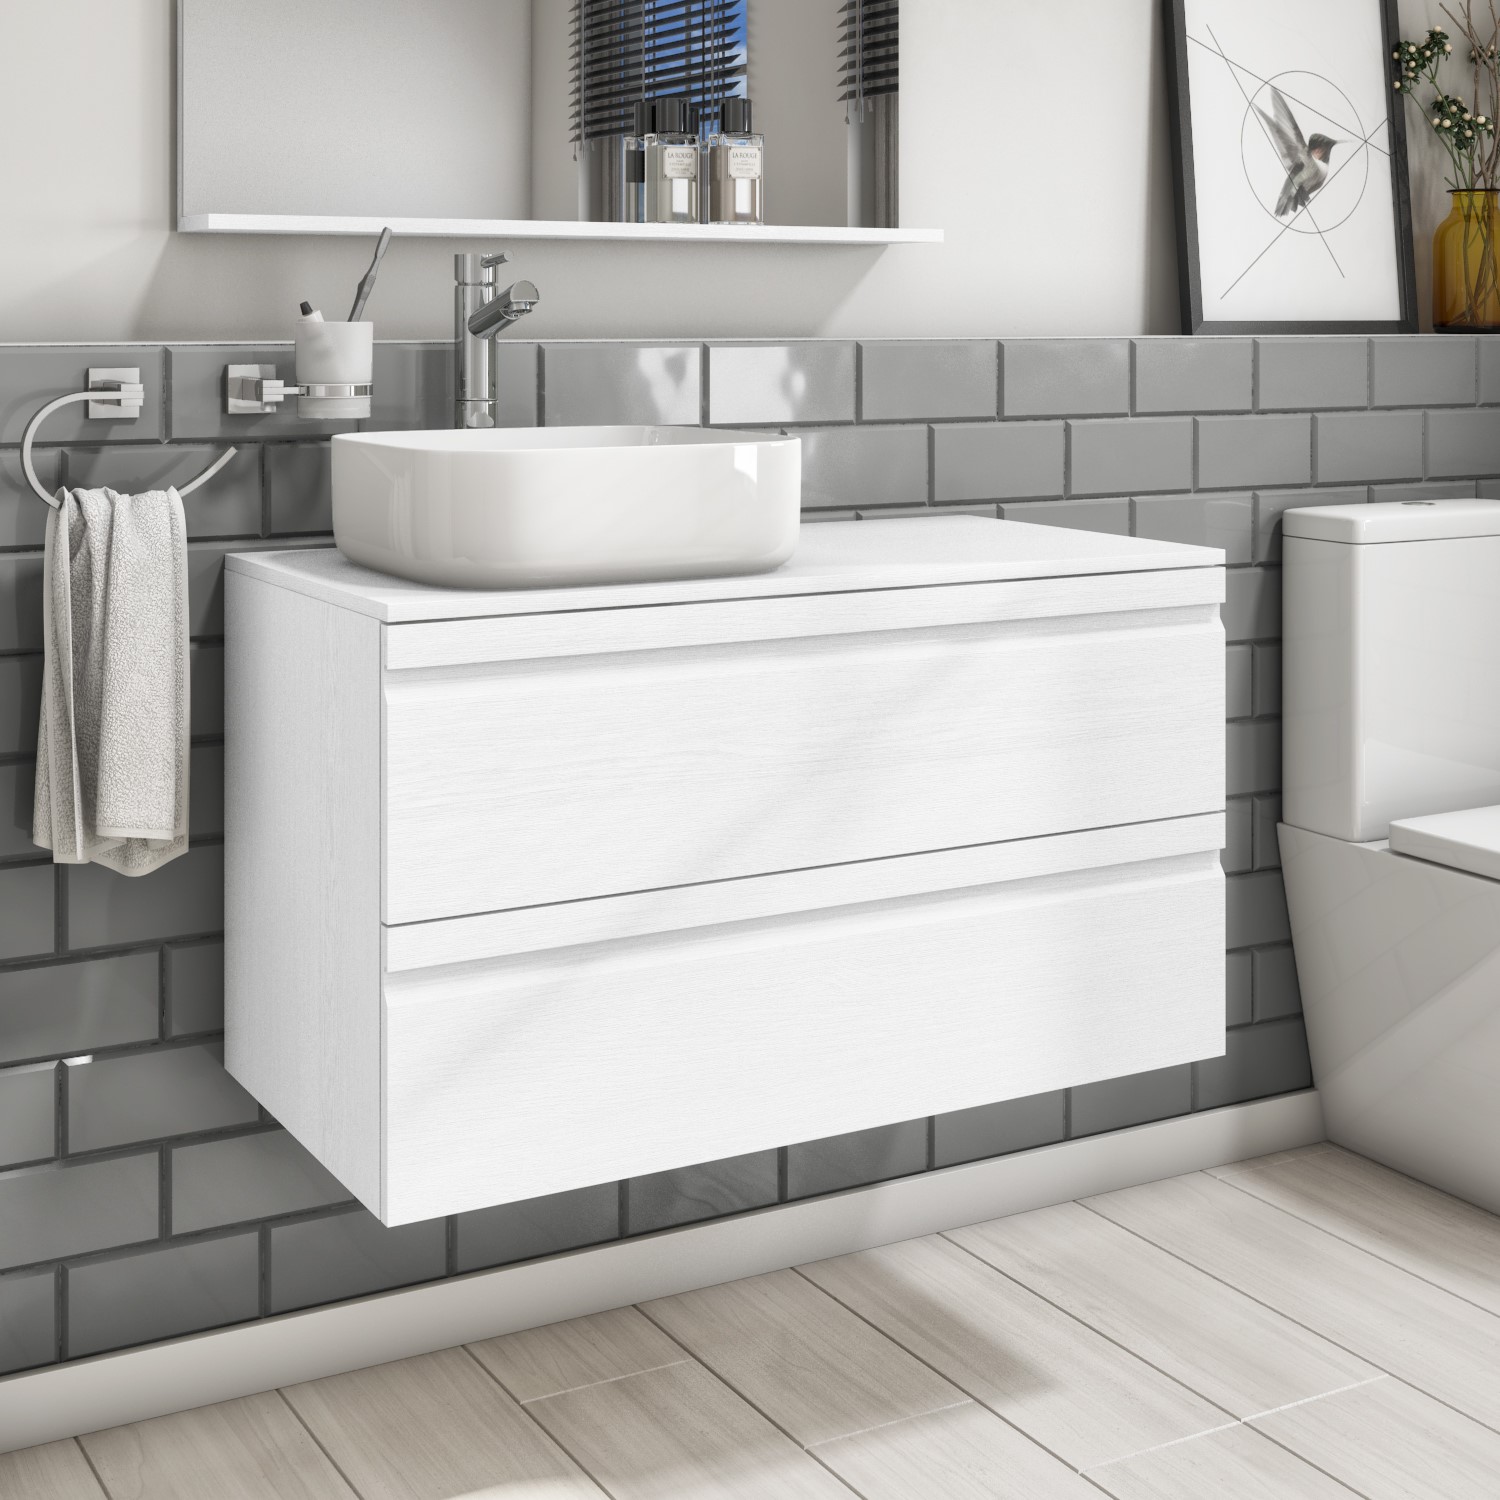 900mm White Wall Hung Countertop Vanity, Bathroom Vanity Units For Countertop Basins